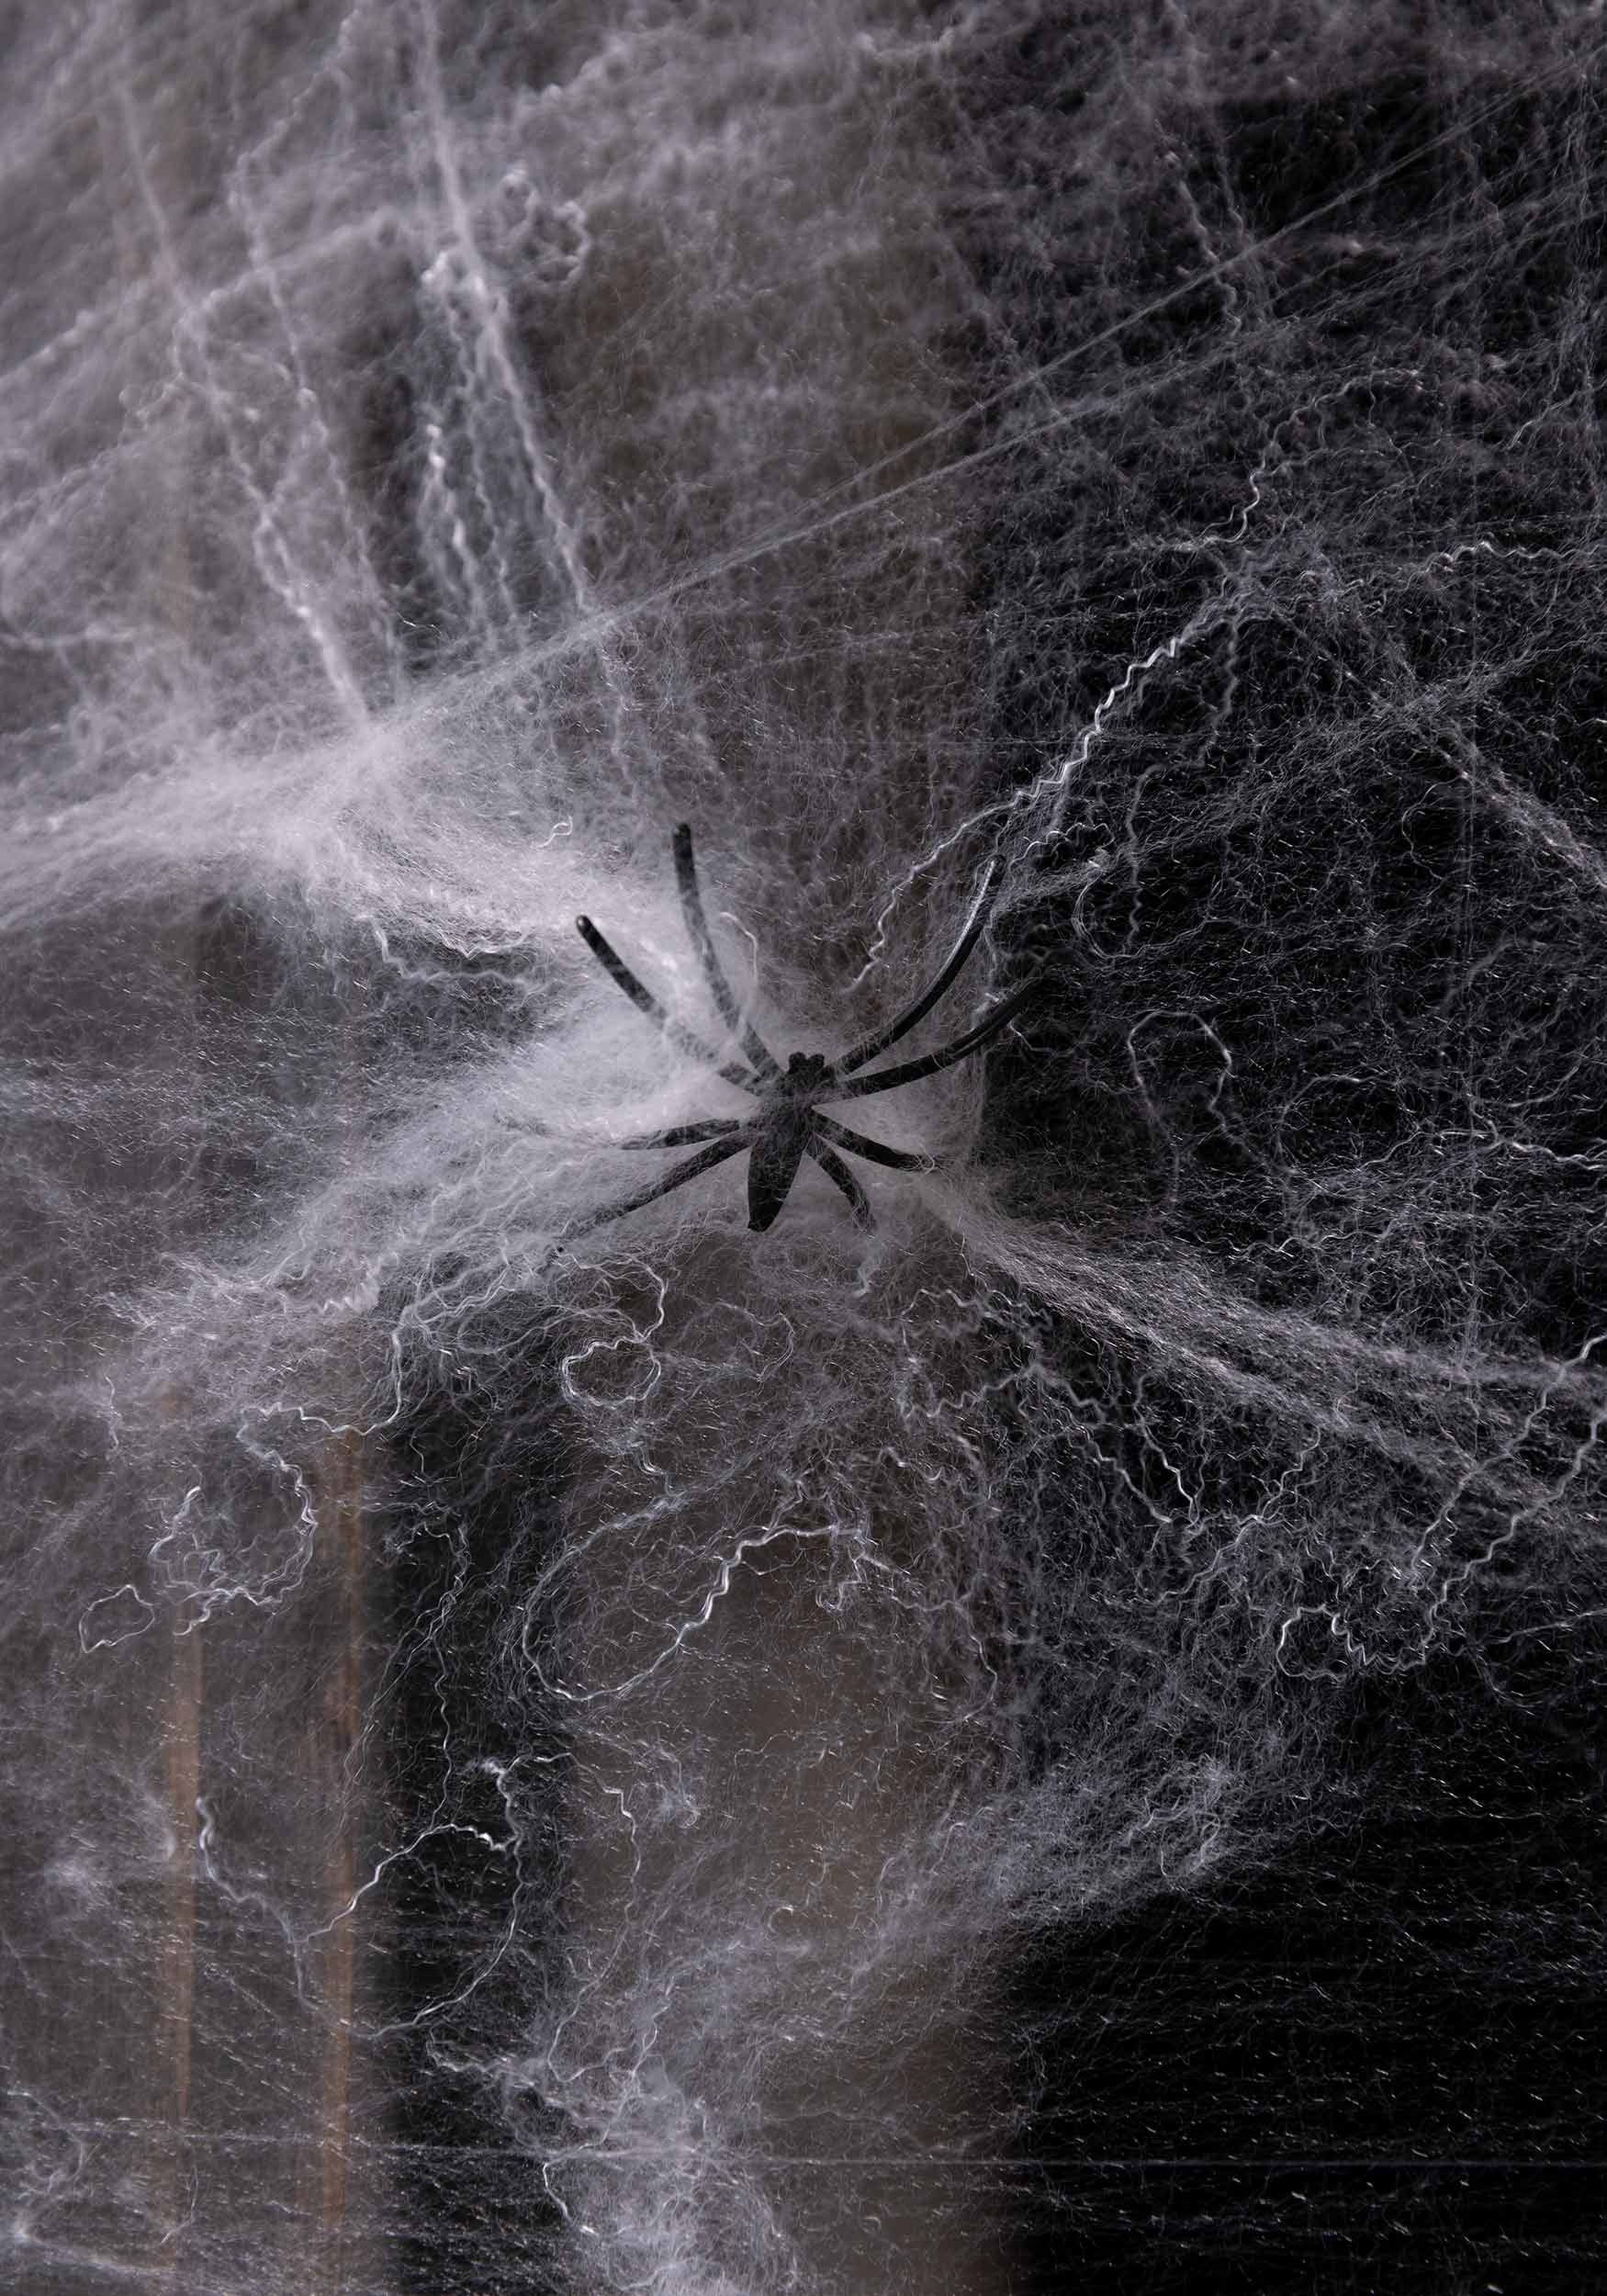 200 Square FT White Spider Web Prop , Halloween Spider Webs